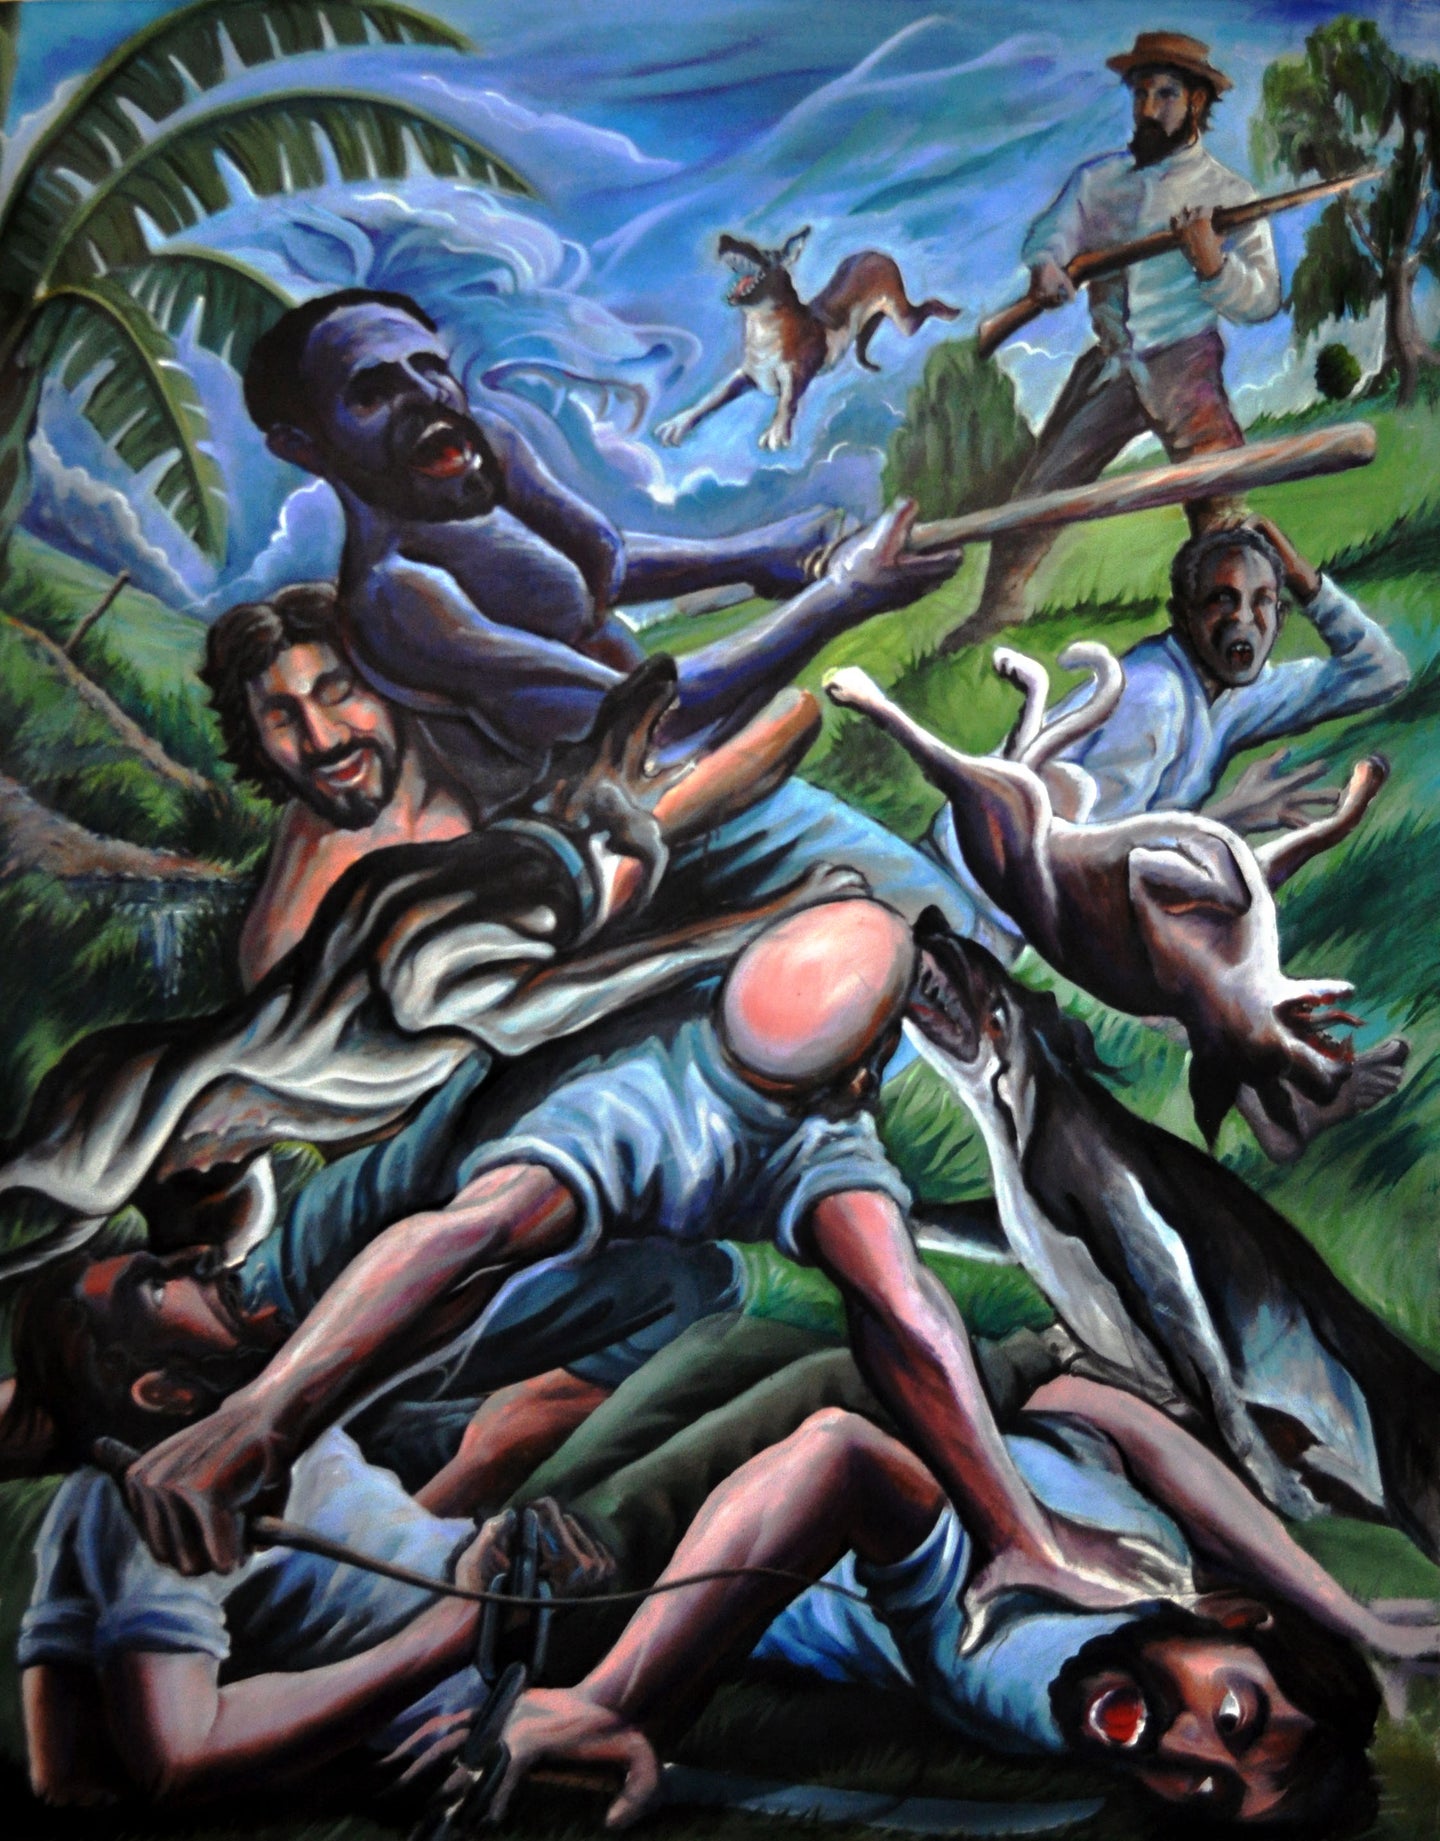 Rebelion of the slaves - Rebelión - VALENTIN TIRADO BARRETO